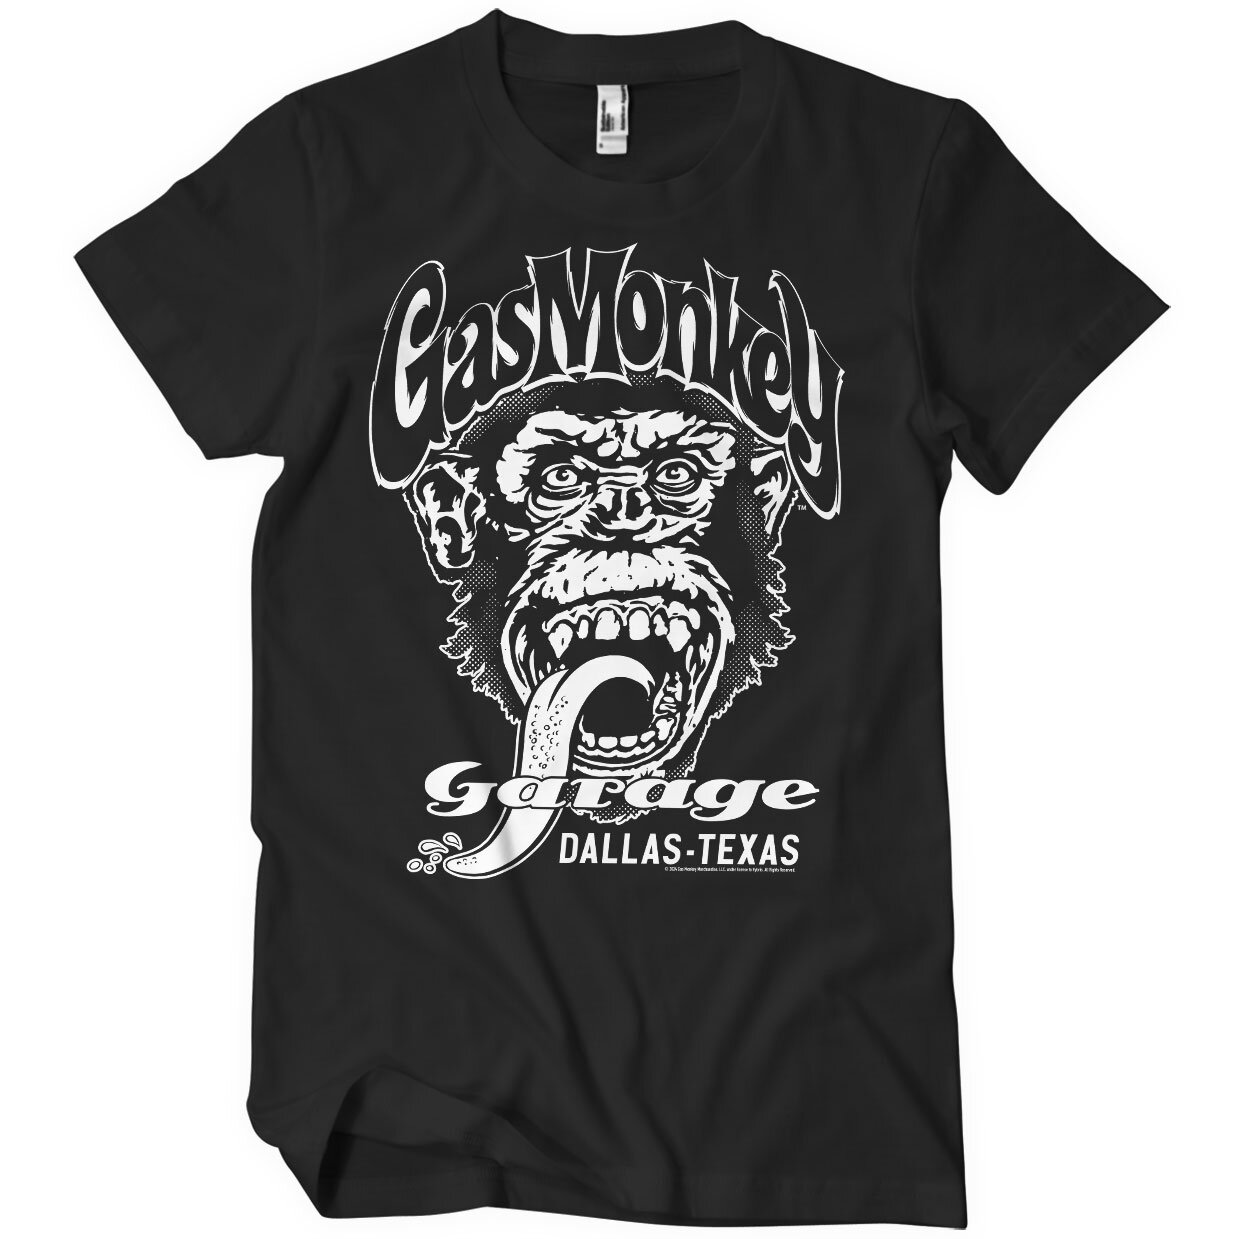 Gas Monkey Garage - Dallas, Texas T-Shirt